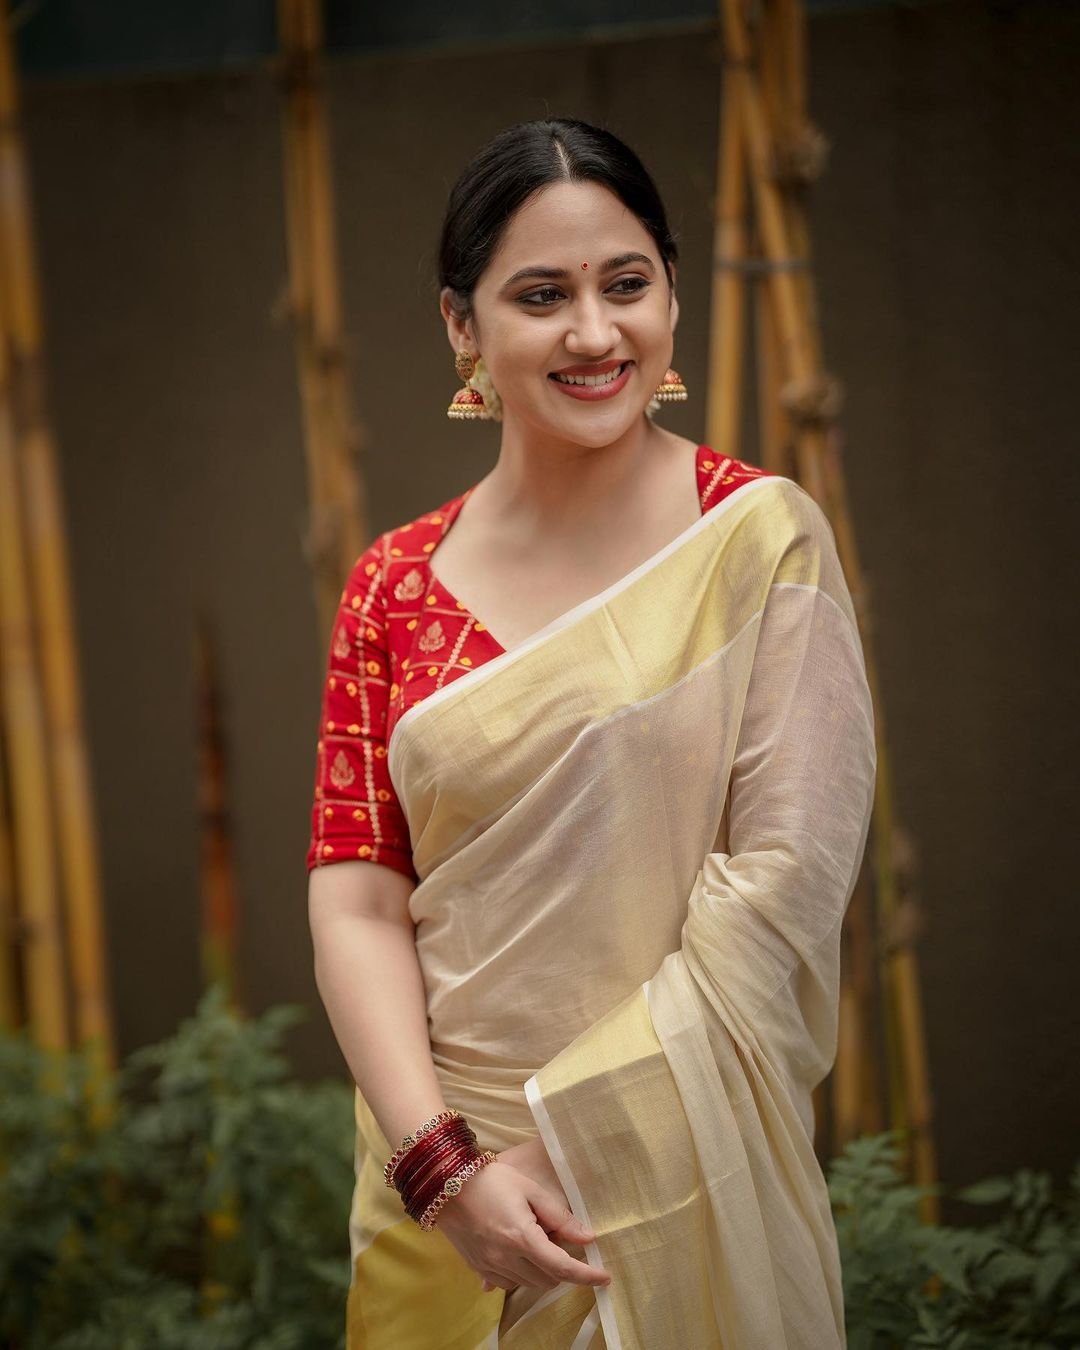 malayalam actress miya george images in yellow saree red blouse